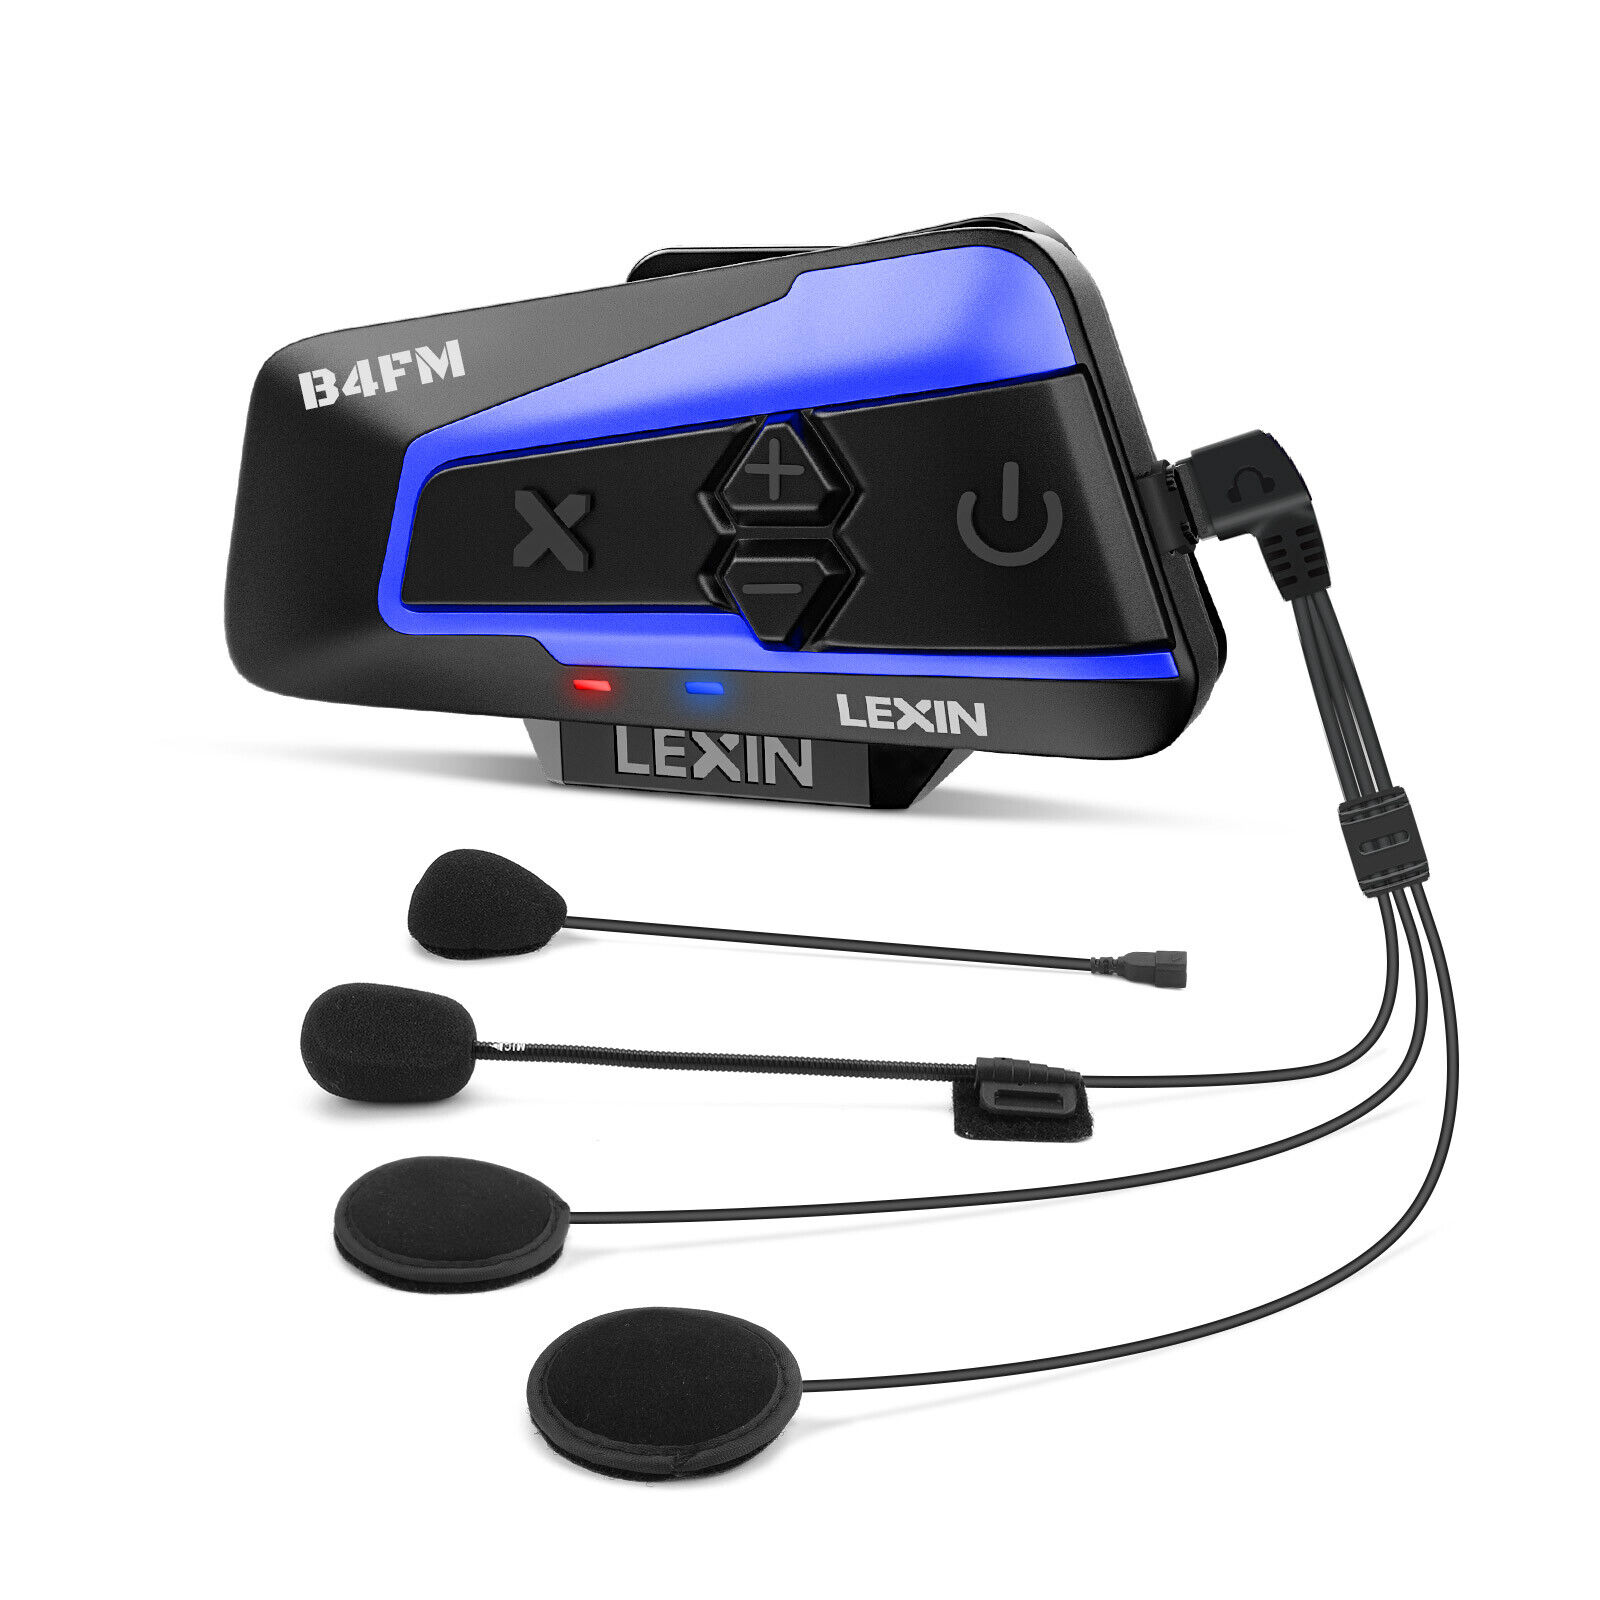 LEXIN B4FM Motorcycle Helmet Bluetooth Headset Intercom 10 Riders & Music Share